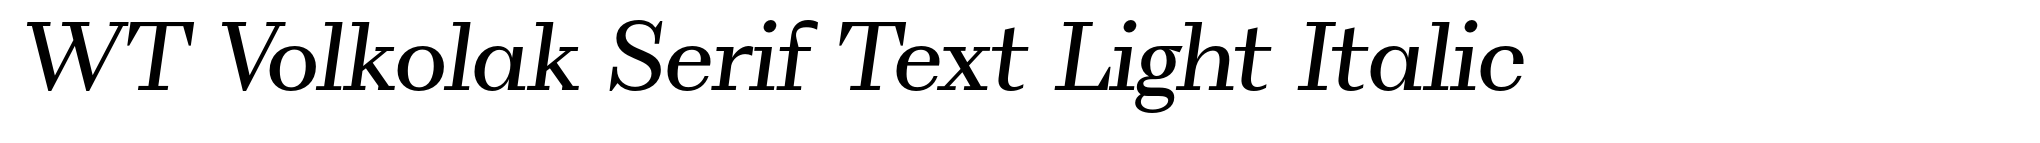 WT Volkolak Serif Text Light Italic image